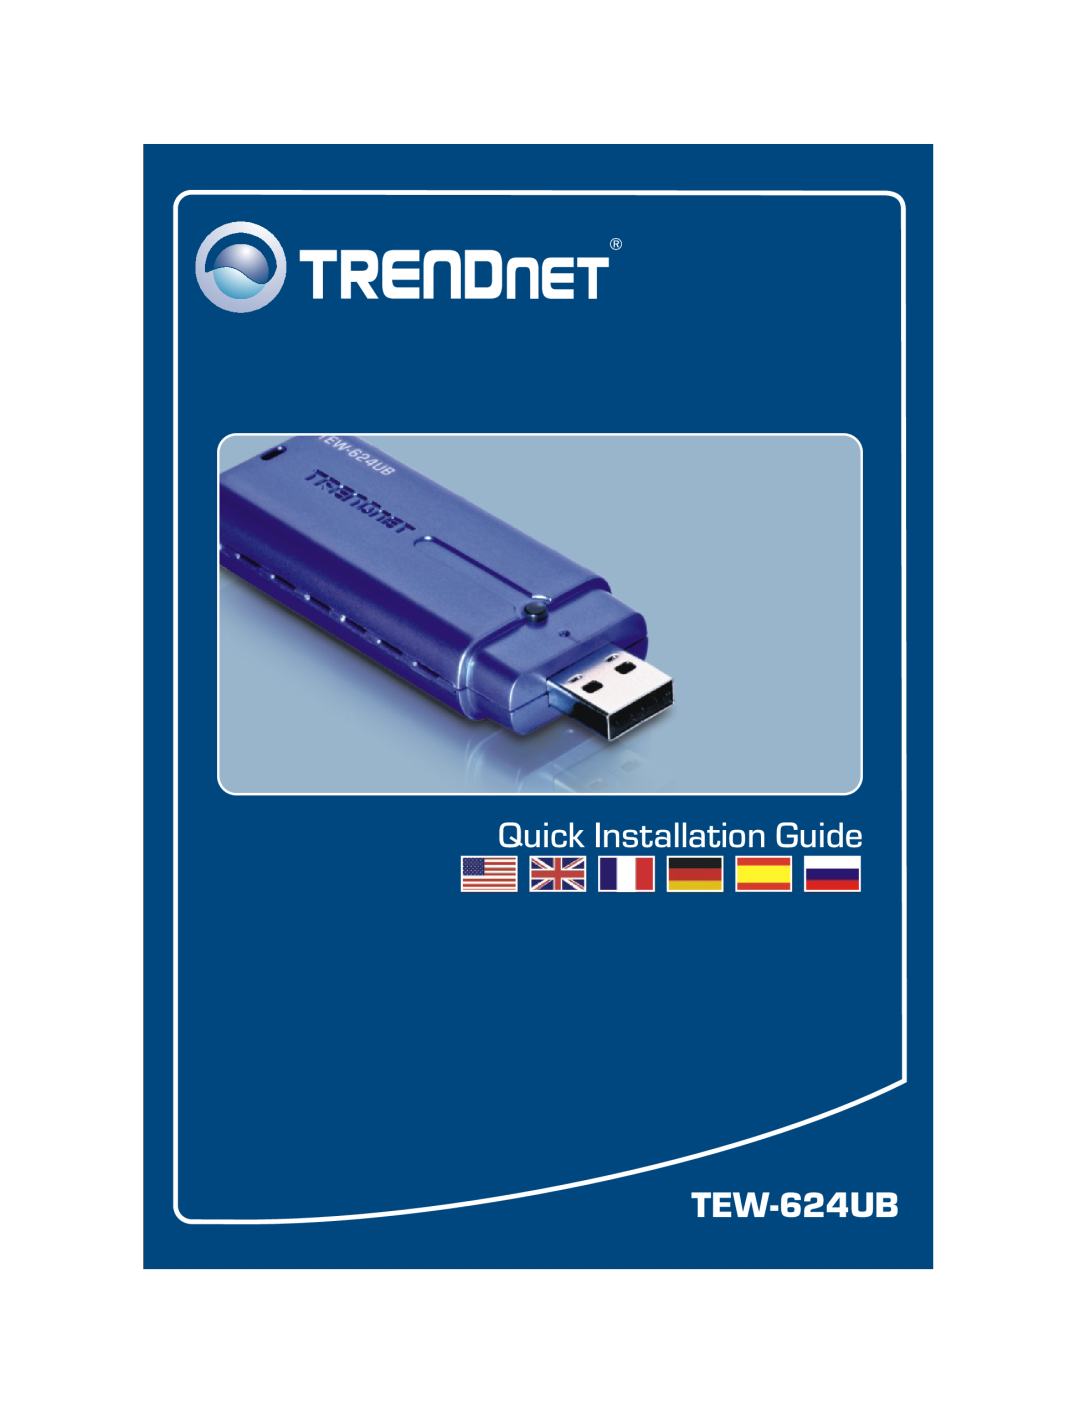 TRENDnet TEW-624UB manual Quick Installation Guide 